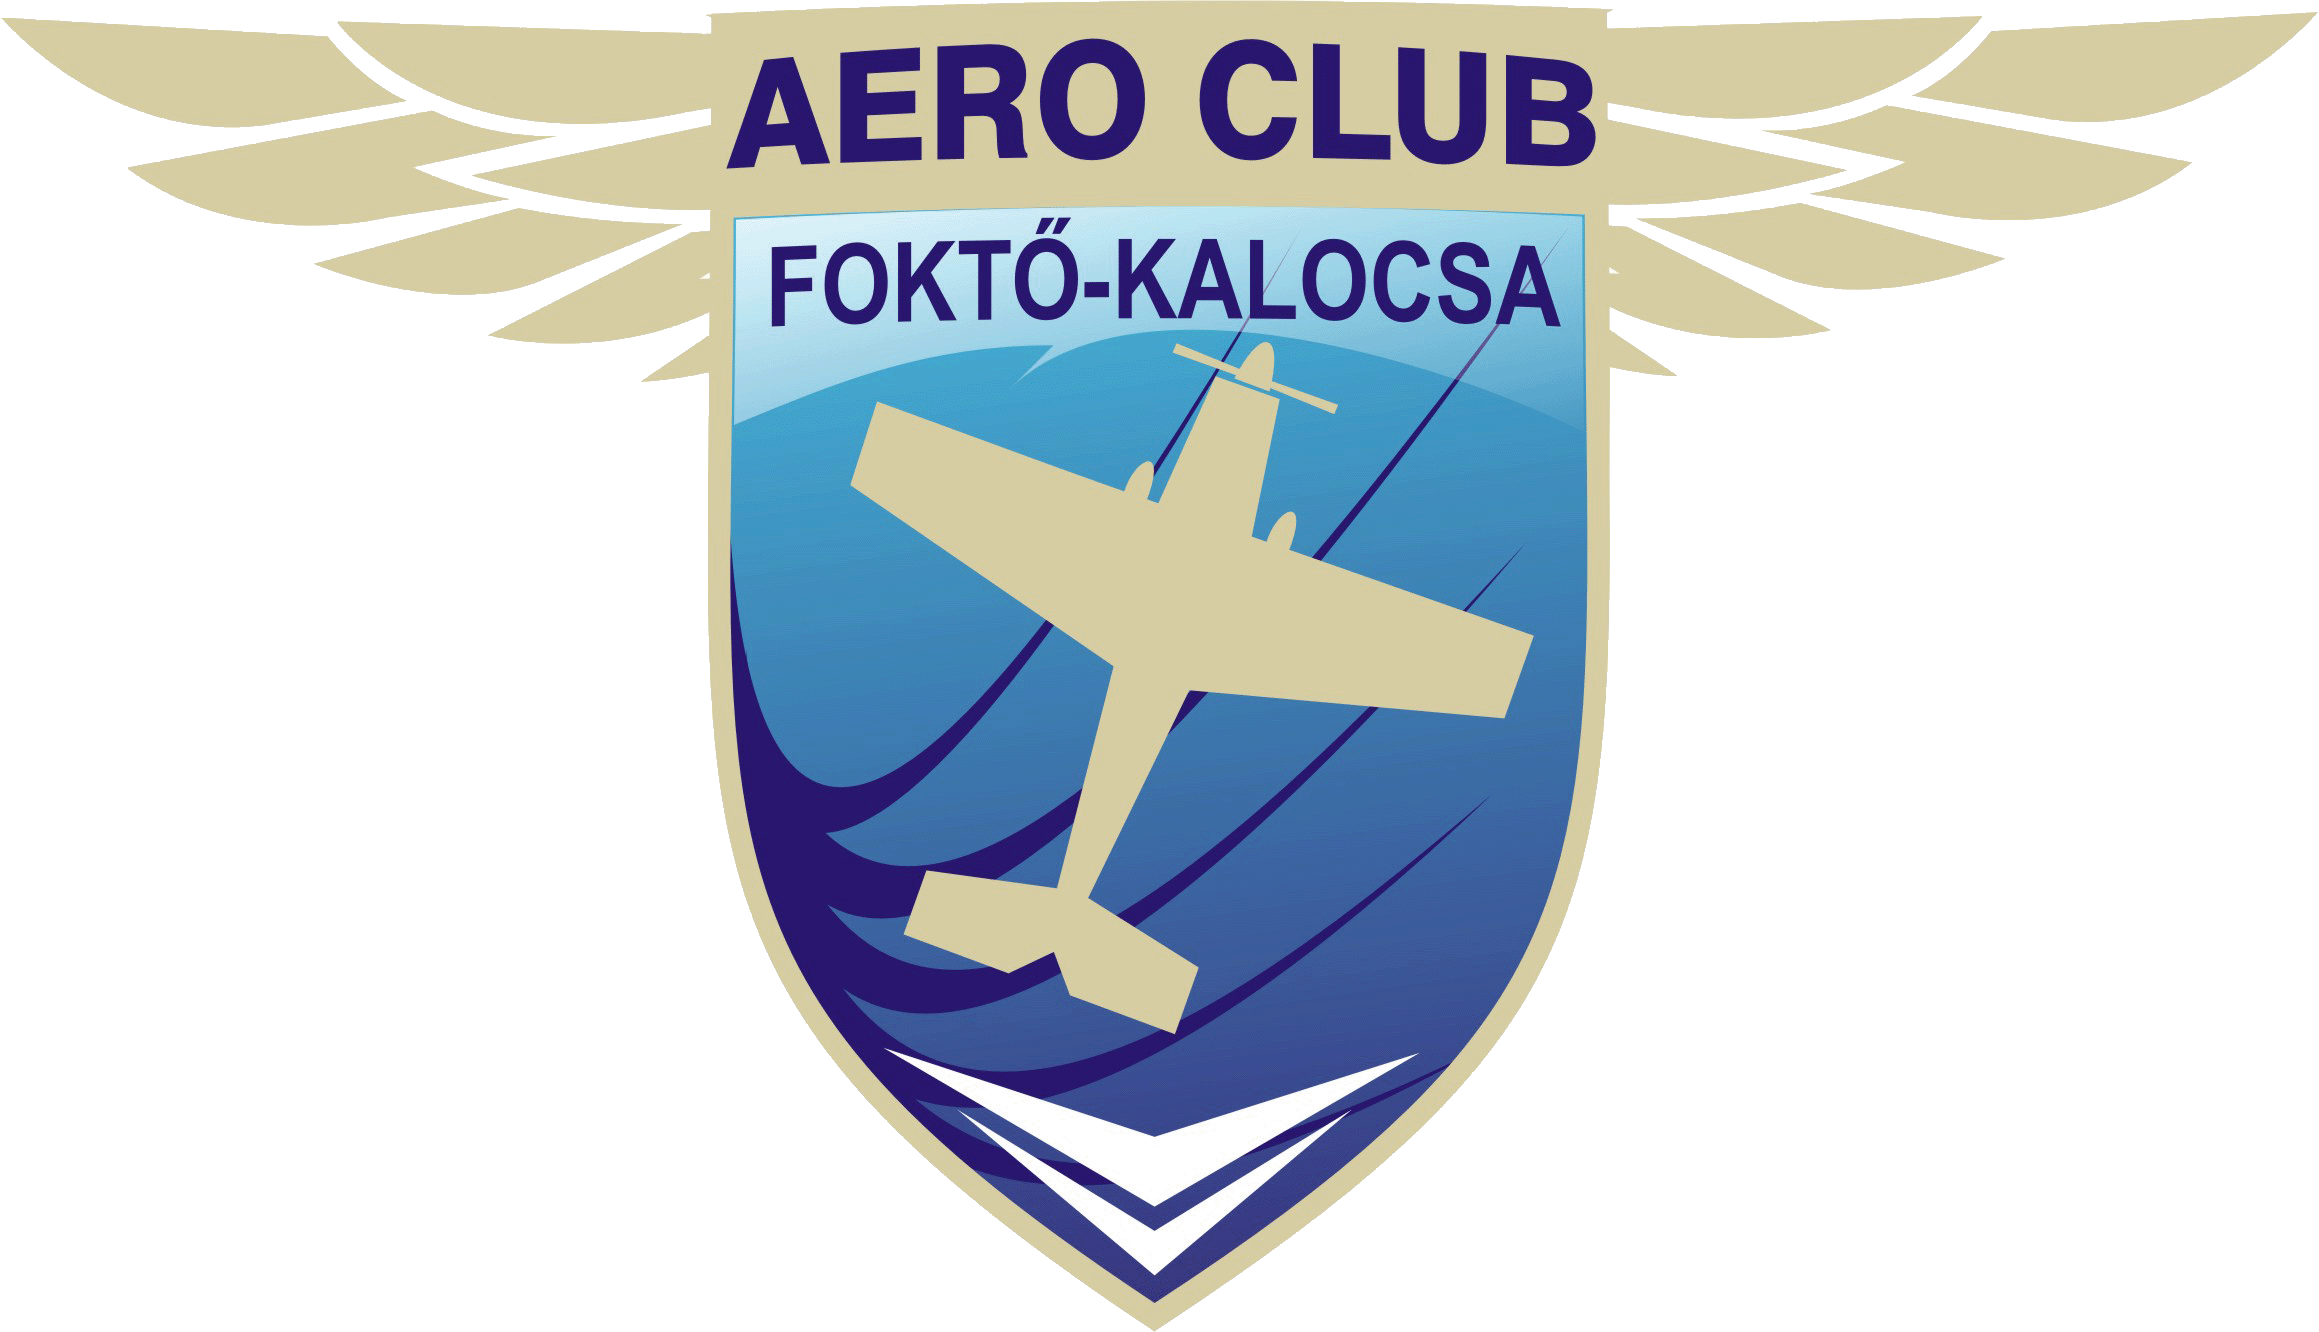 info@aeroclubfokto-kalocsa.hu